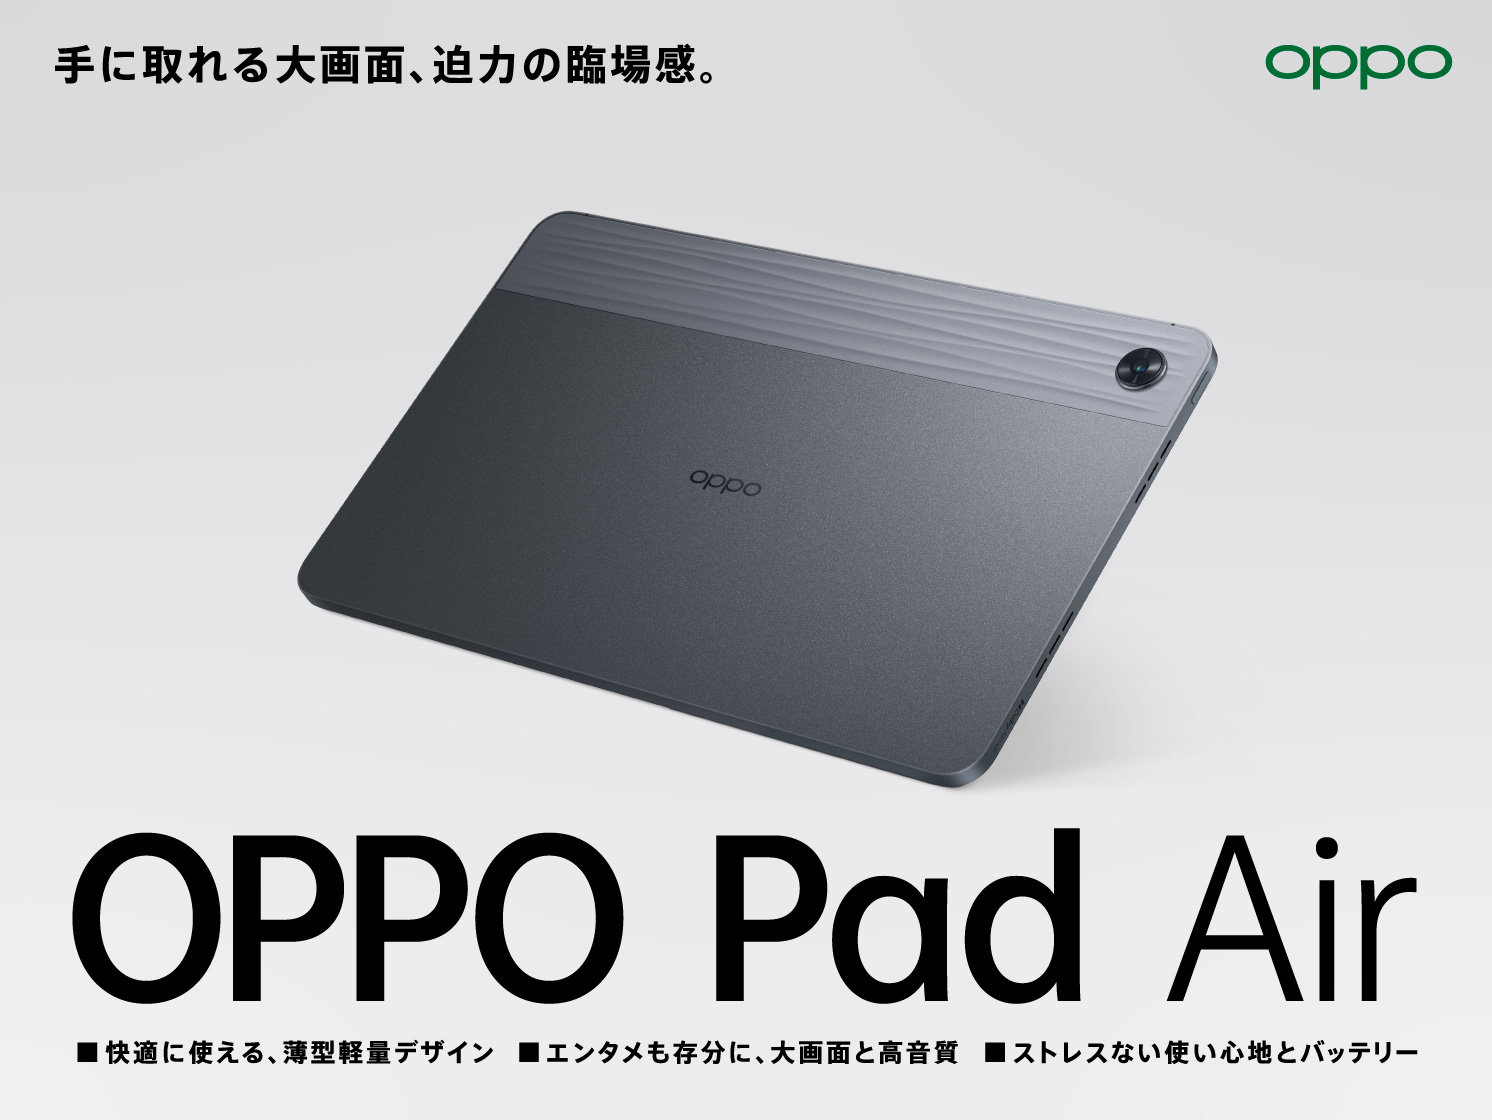 OPPO初のタブレット「Pad Air」が国内上陸 3万7800円で9月30日 